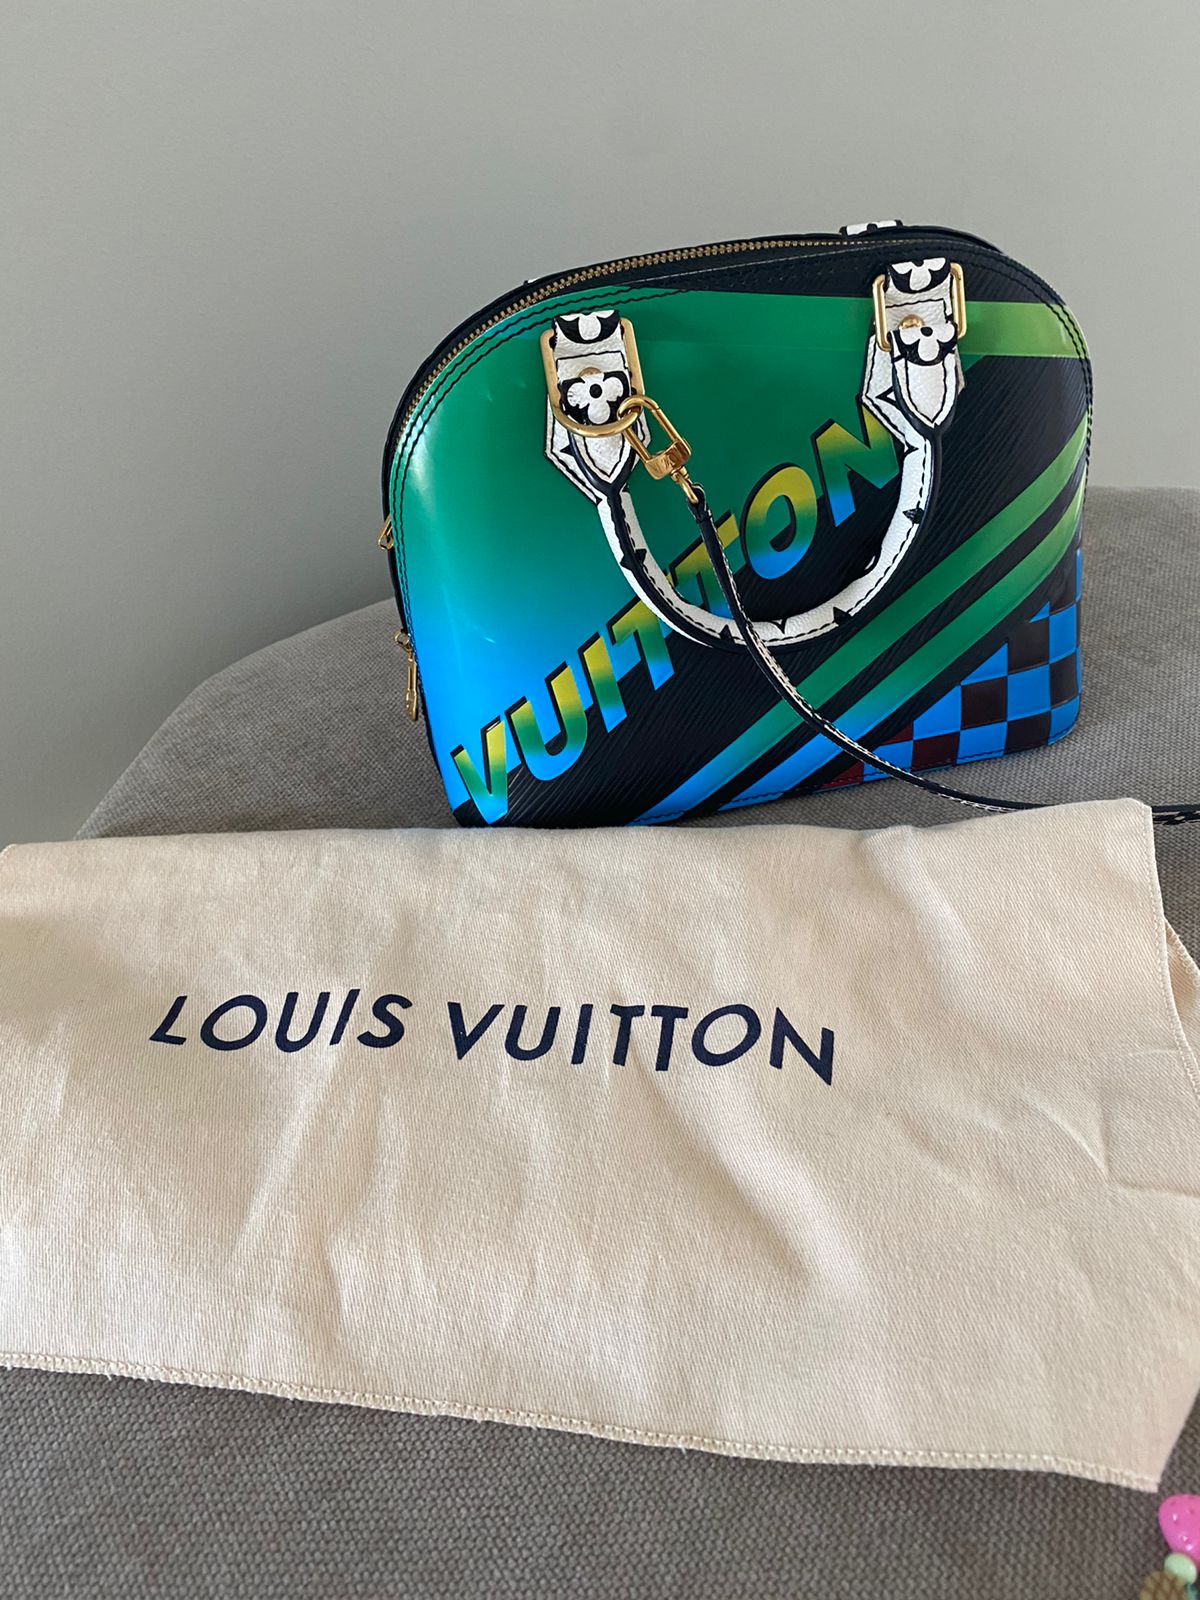 Shop Louis Vuitton Alma bb (M57540) by LesAiles